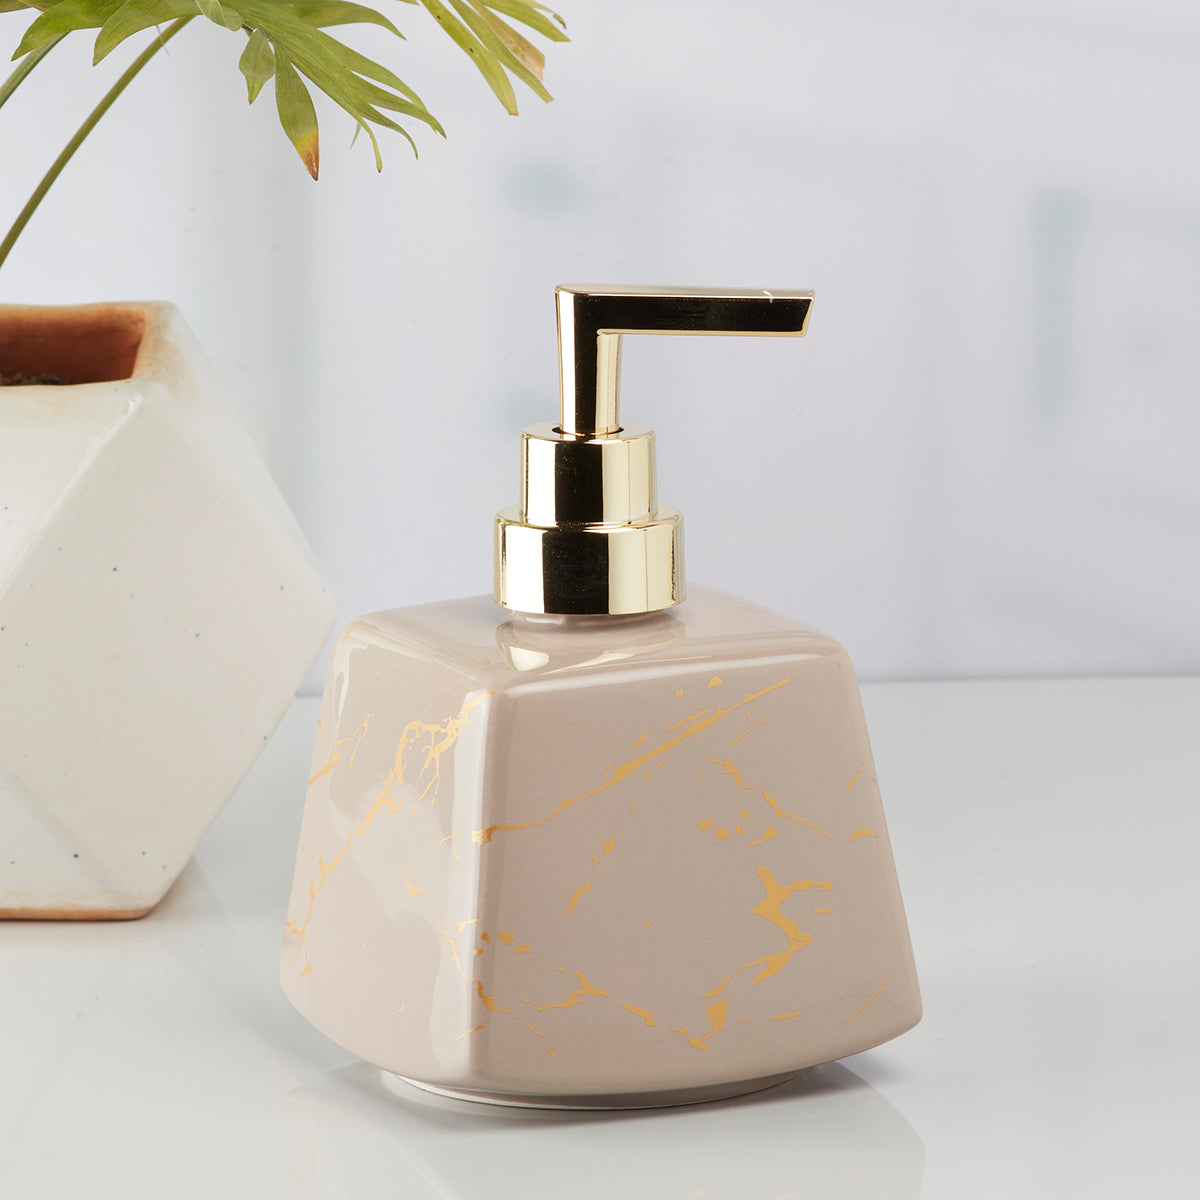 Ceramic Soap Dispenser handwash Pump for Bathroom, Set of 1, Green/Gold (10151)